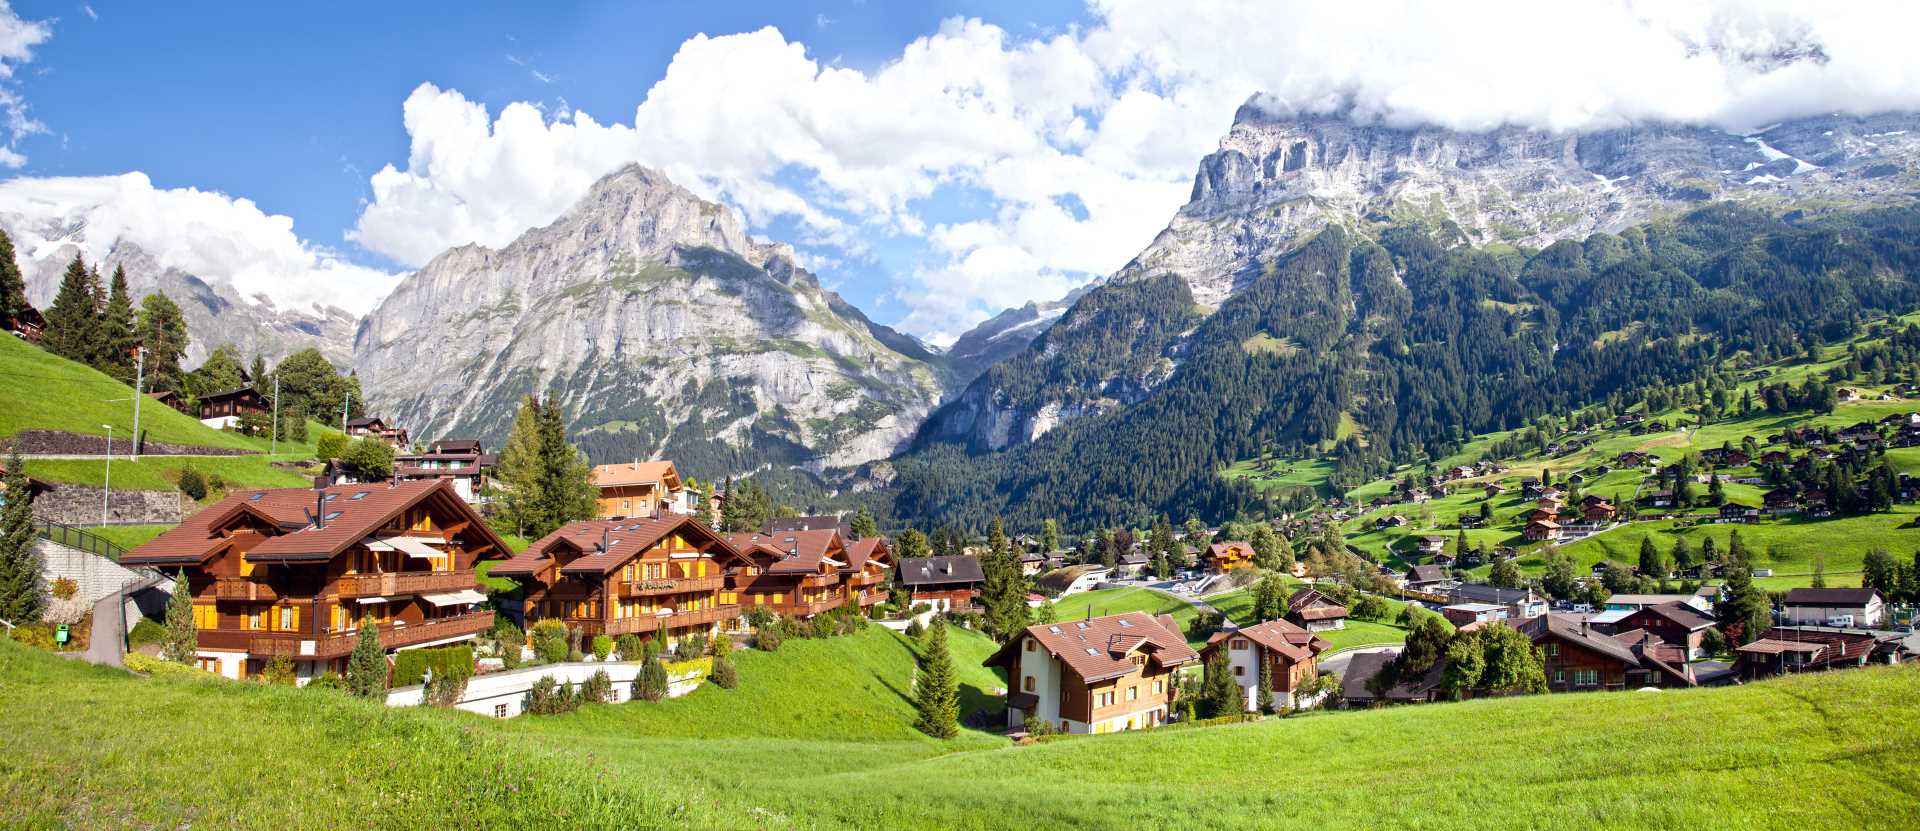 Grindelwald, Interlaken-Oberhasli, Berna, Suiza - Campings en Suiza